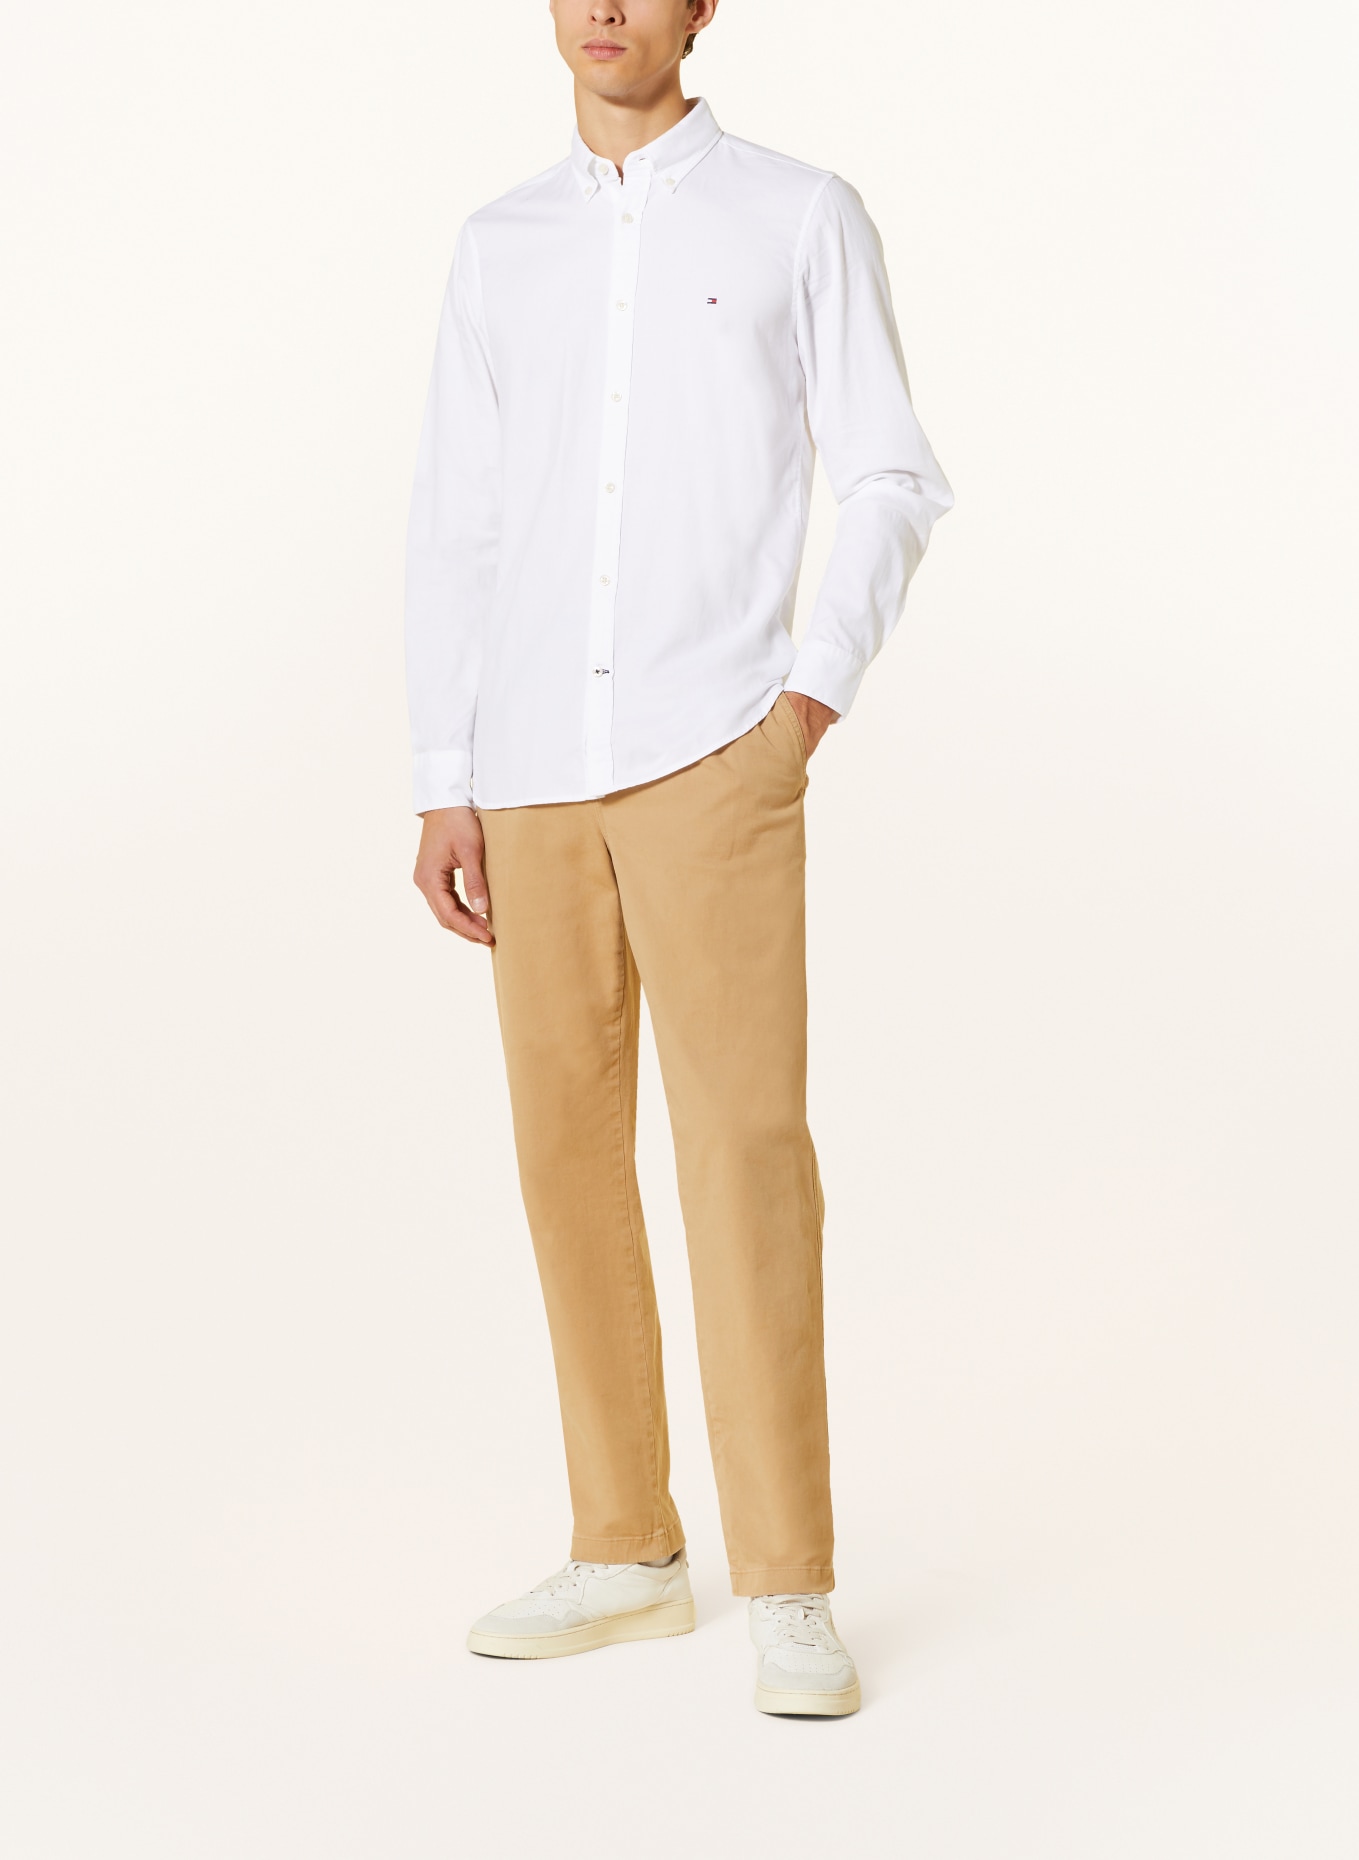 TOMMY HILFIGER Hemd FLEX Slim Fit, Farbe: WEISS (Bild 2)